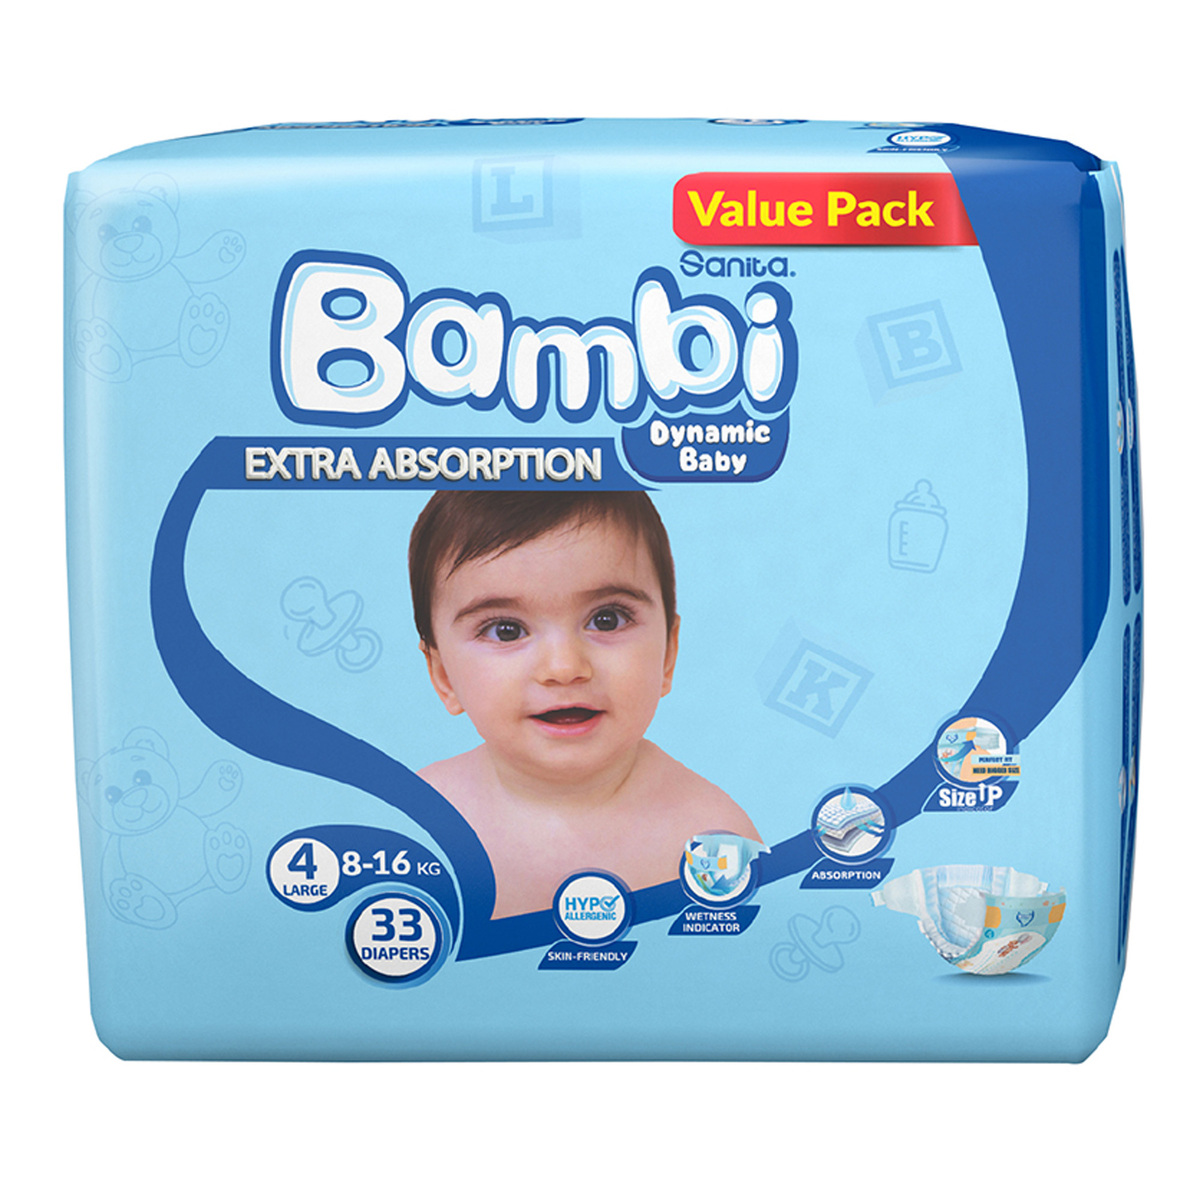 Sanita Bambi Baby Diaper Value Pack Size 4 Large 8-16kg 33 pcs